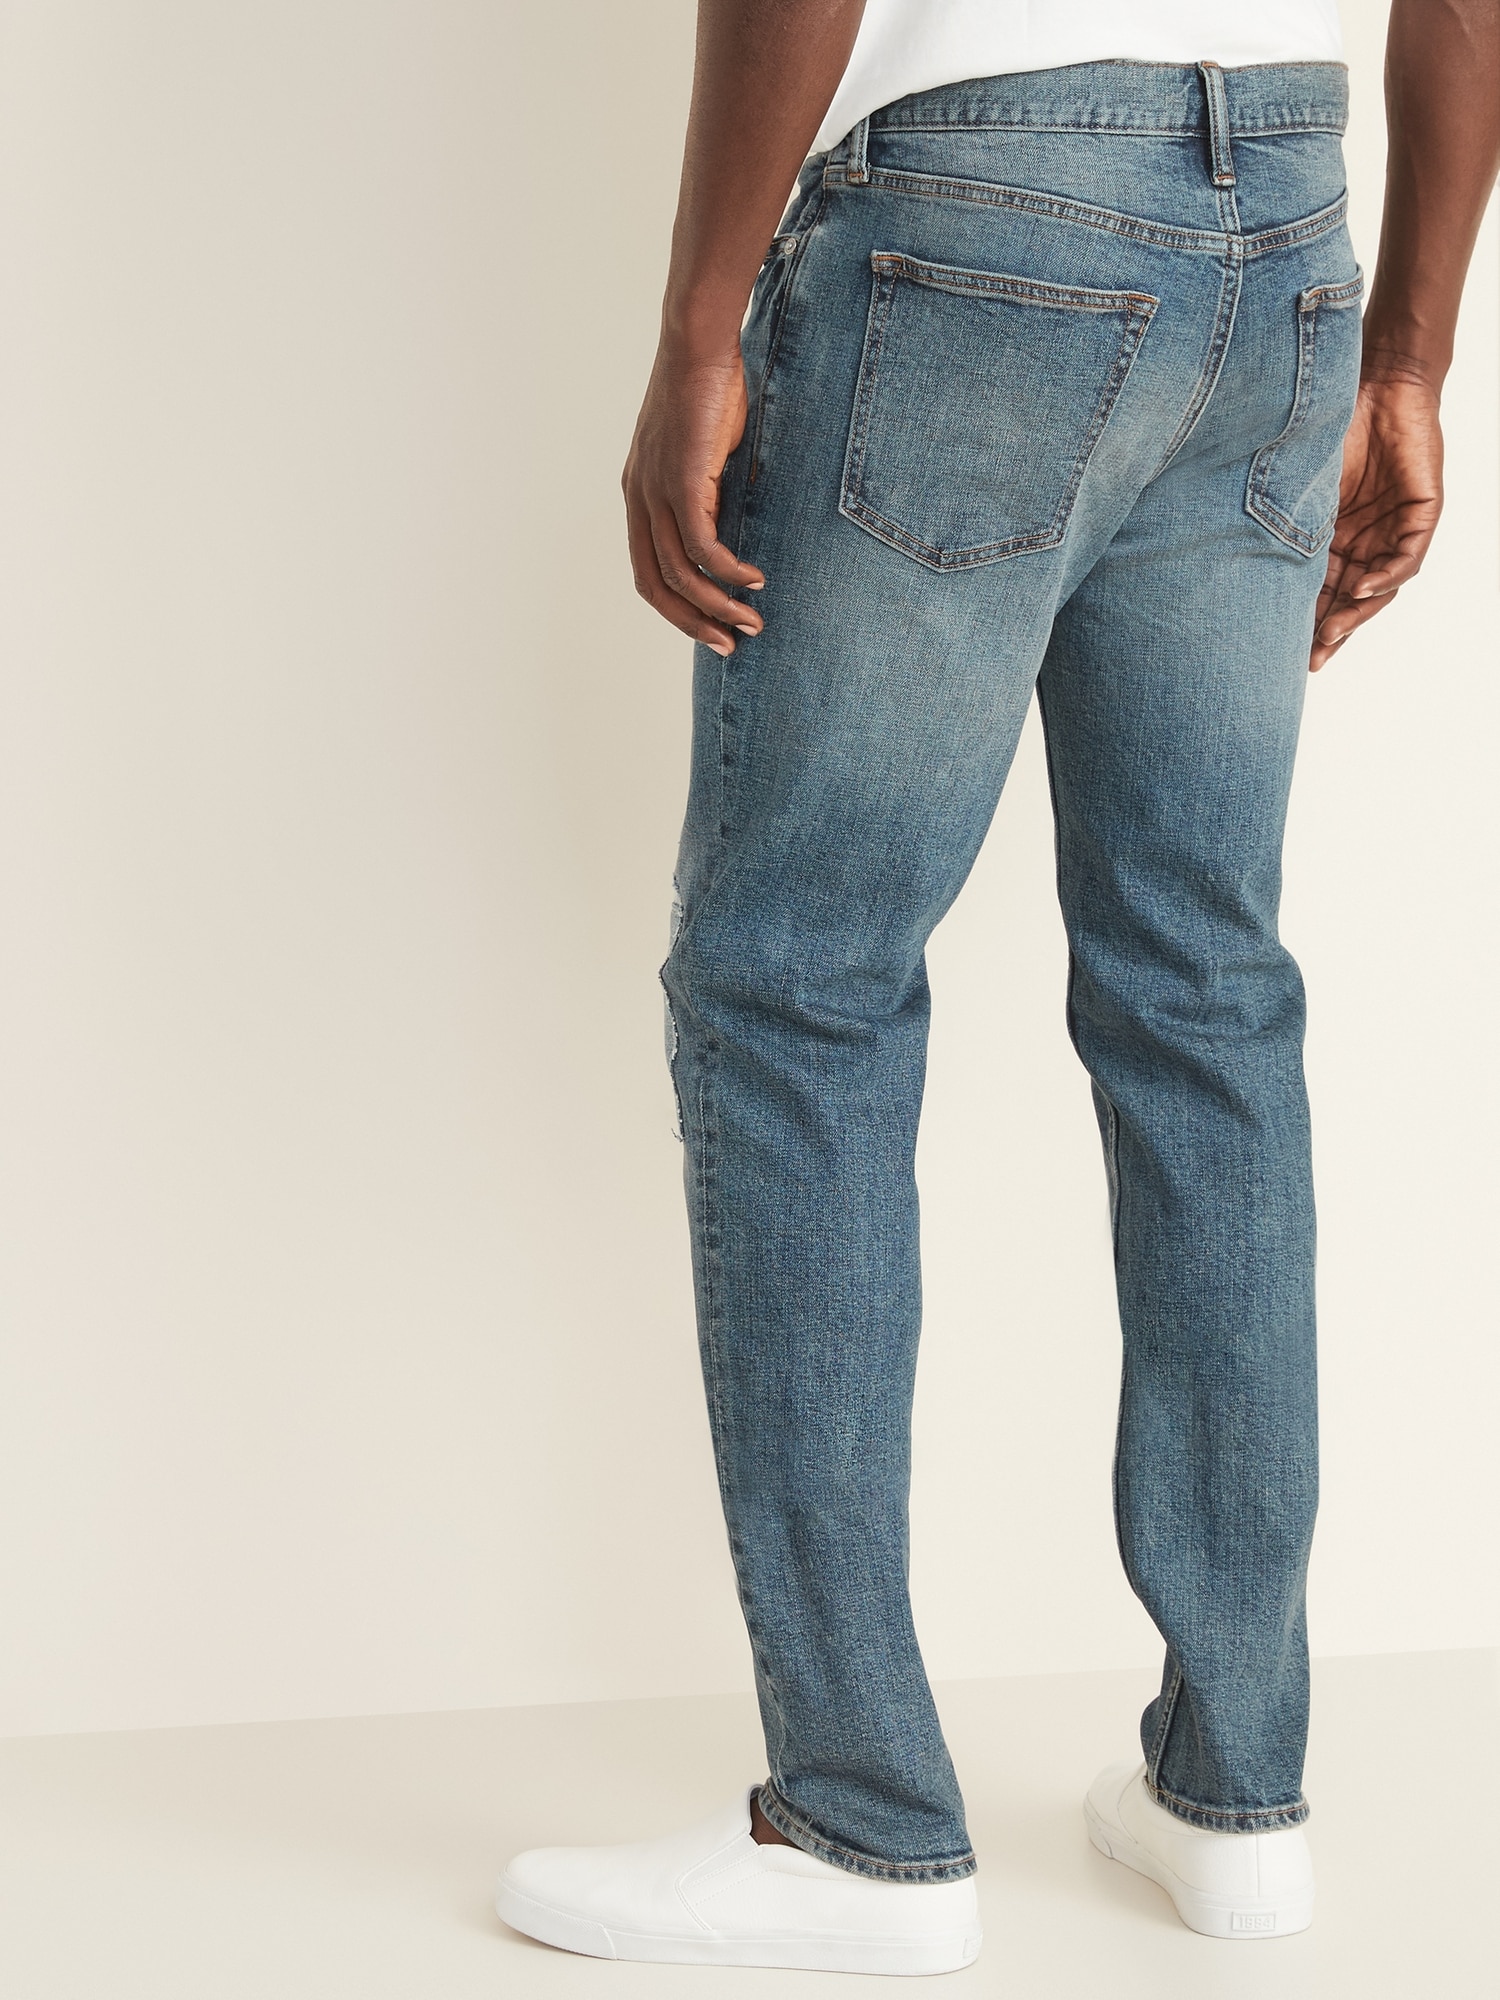 Relaxed Slim Built-In Flex Jeans For Men | Old Navy